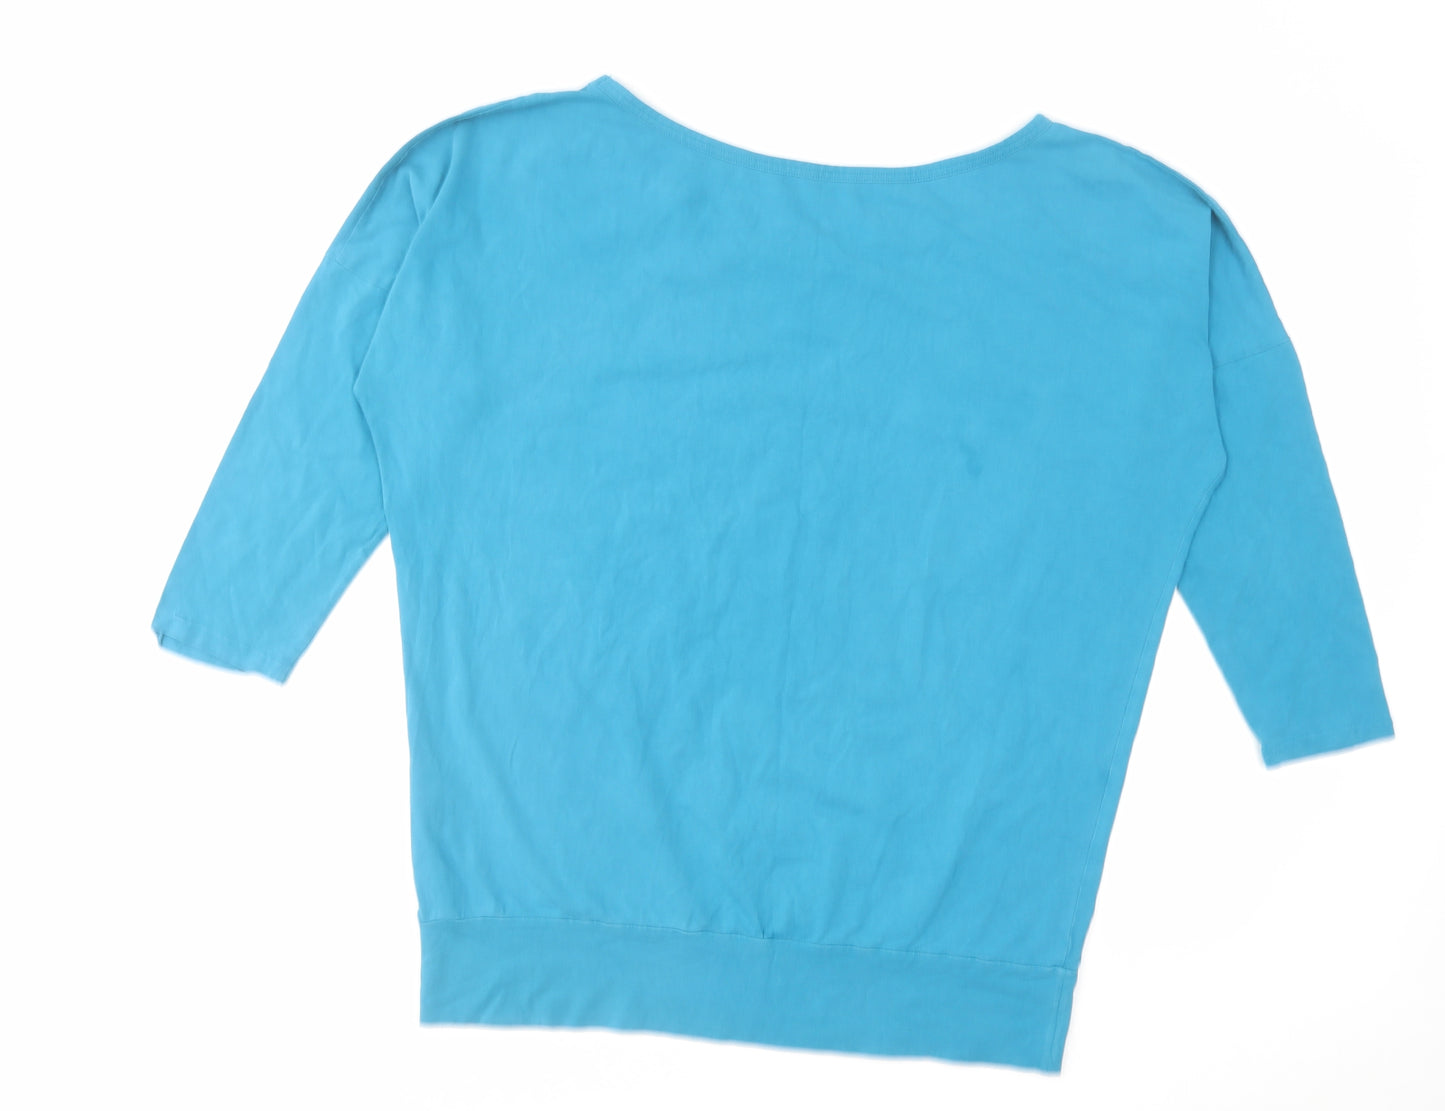 Molke Womens Blue Cotton Basic T-Shirt Size XL Boat Neck